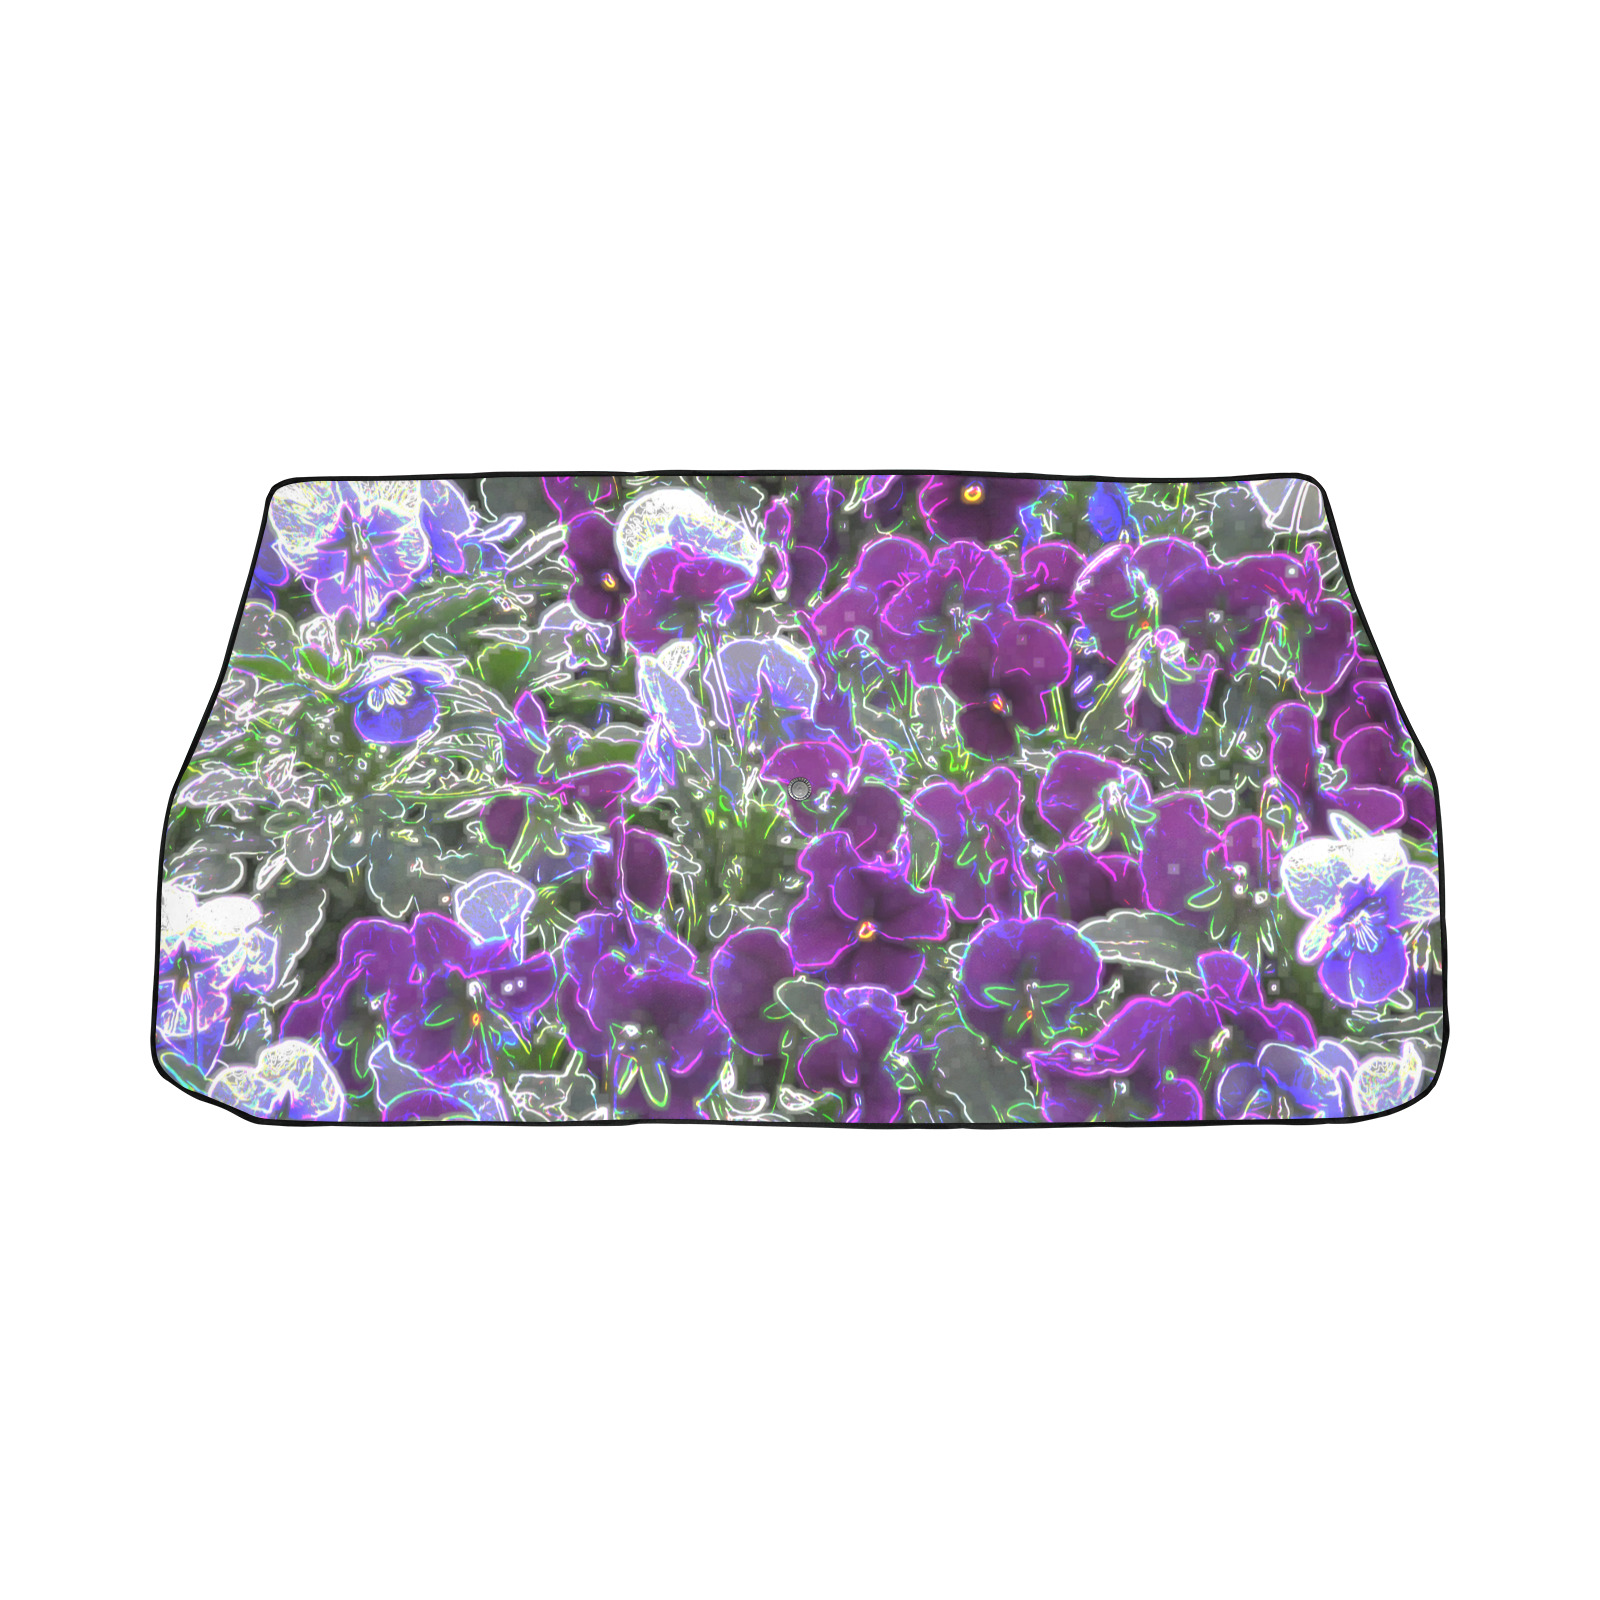 Field Of Purple Flowers 8420 Car Sun Shade Umbrella 58"x29"